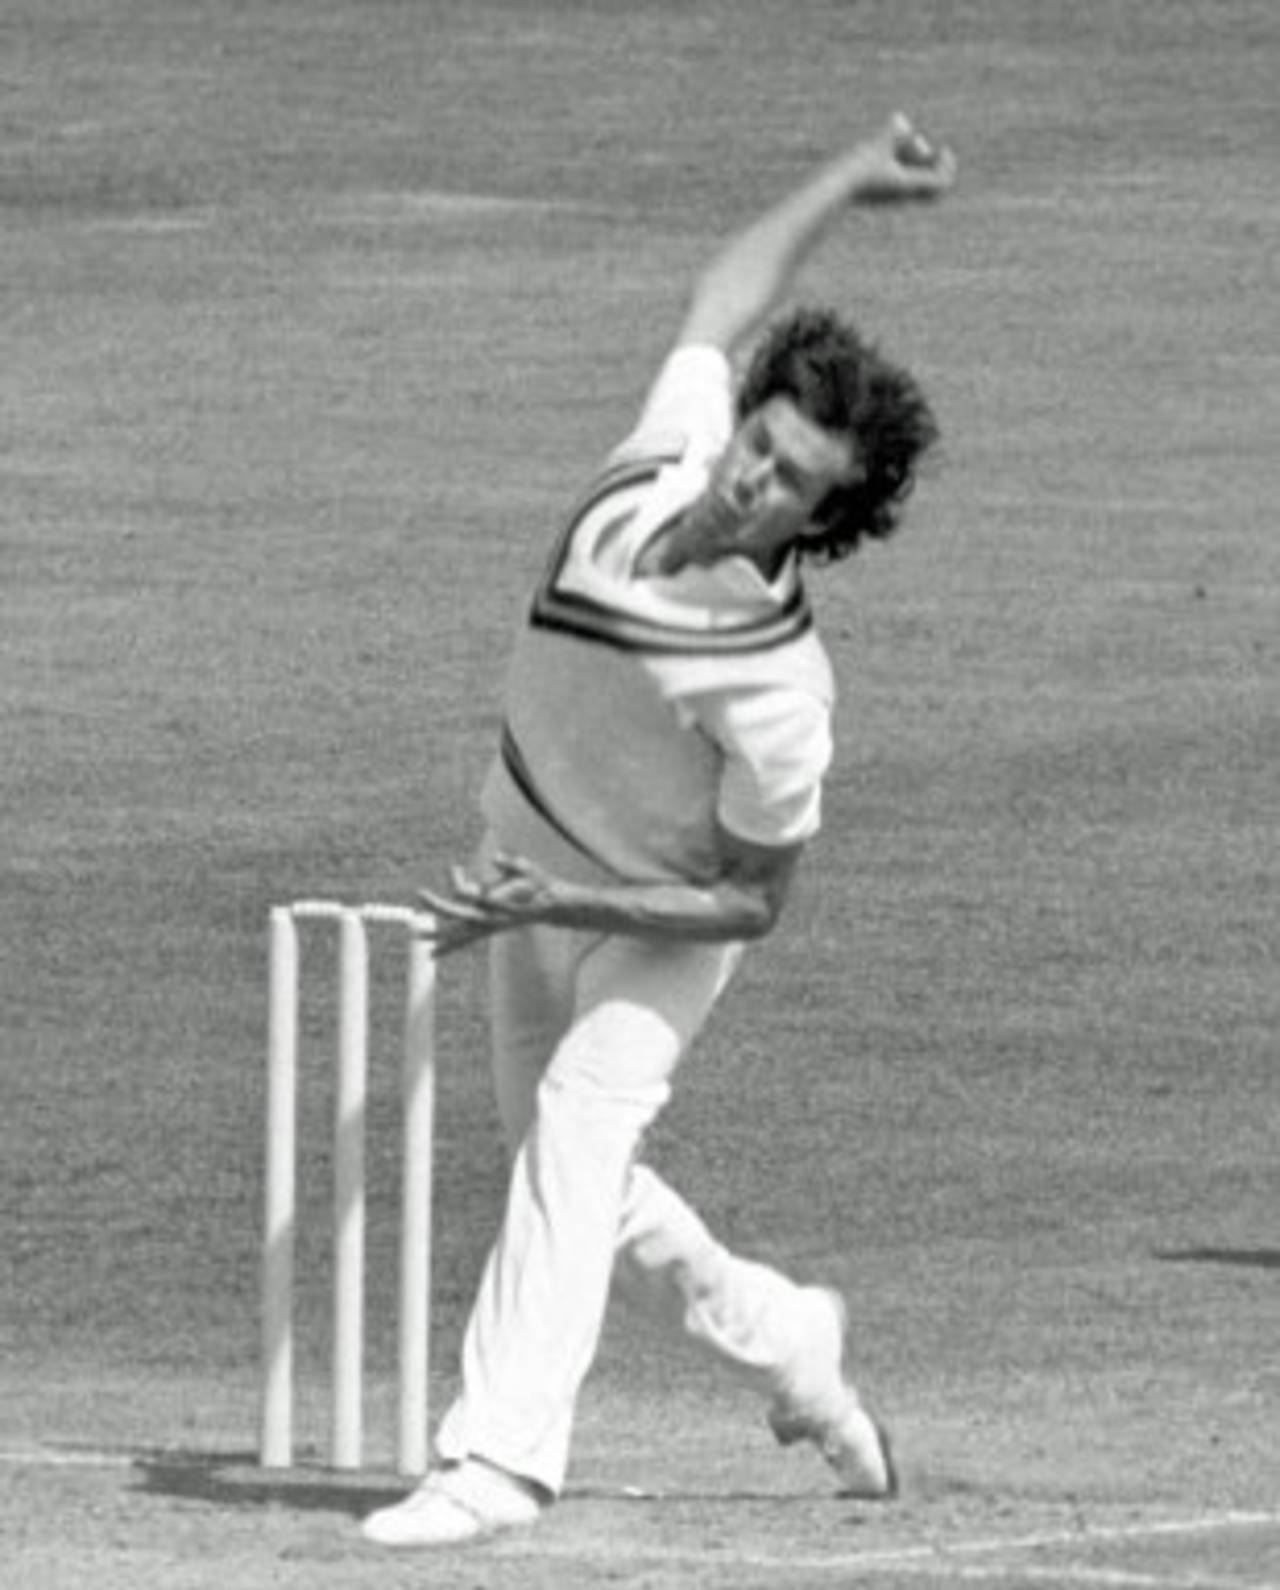 Imran Khan bowls, 1982